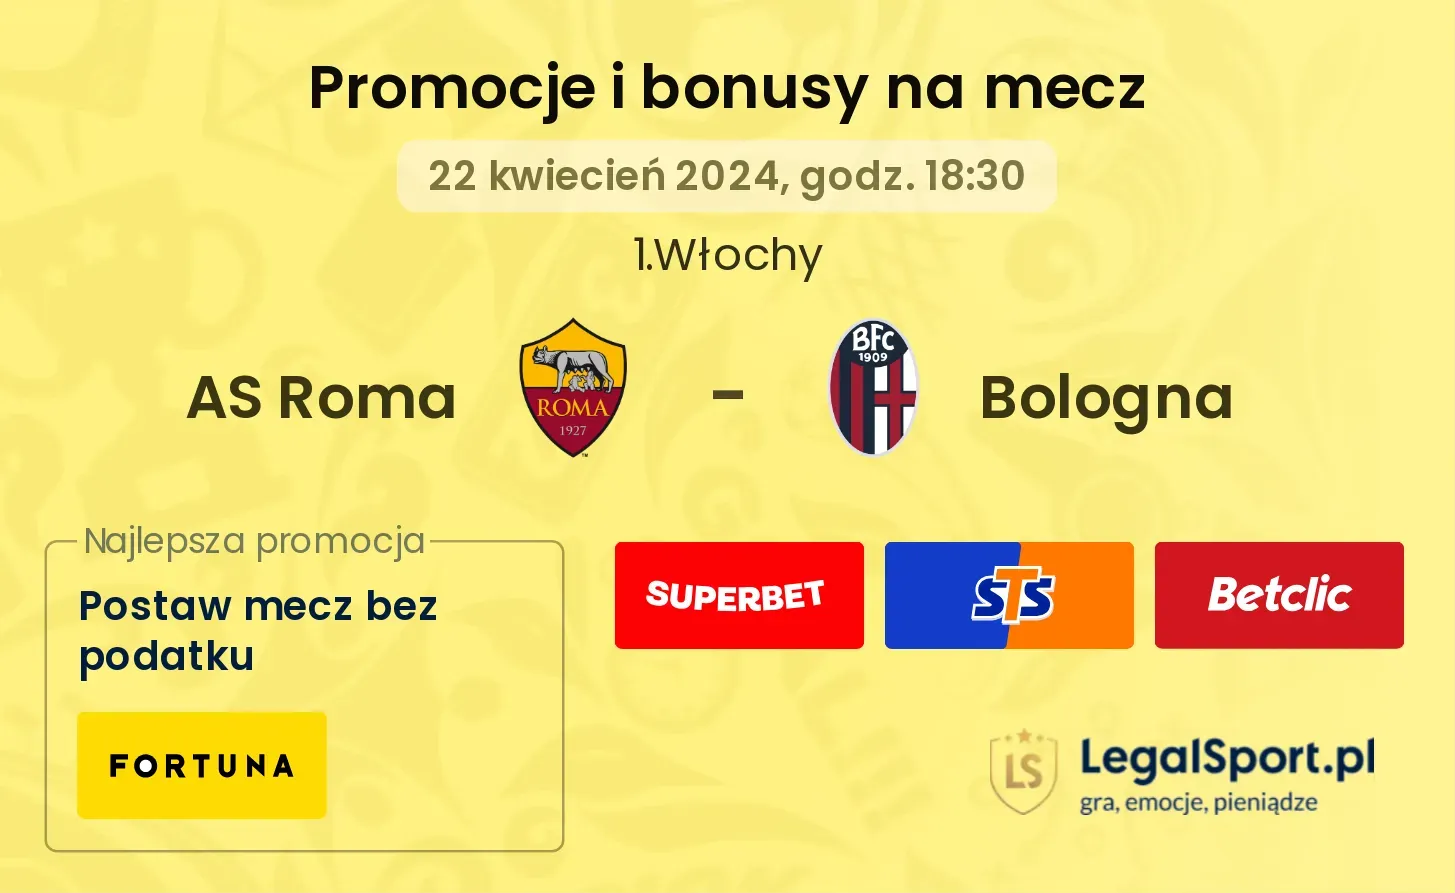 AS Roma - Bologna promocje bonusy na mecz